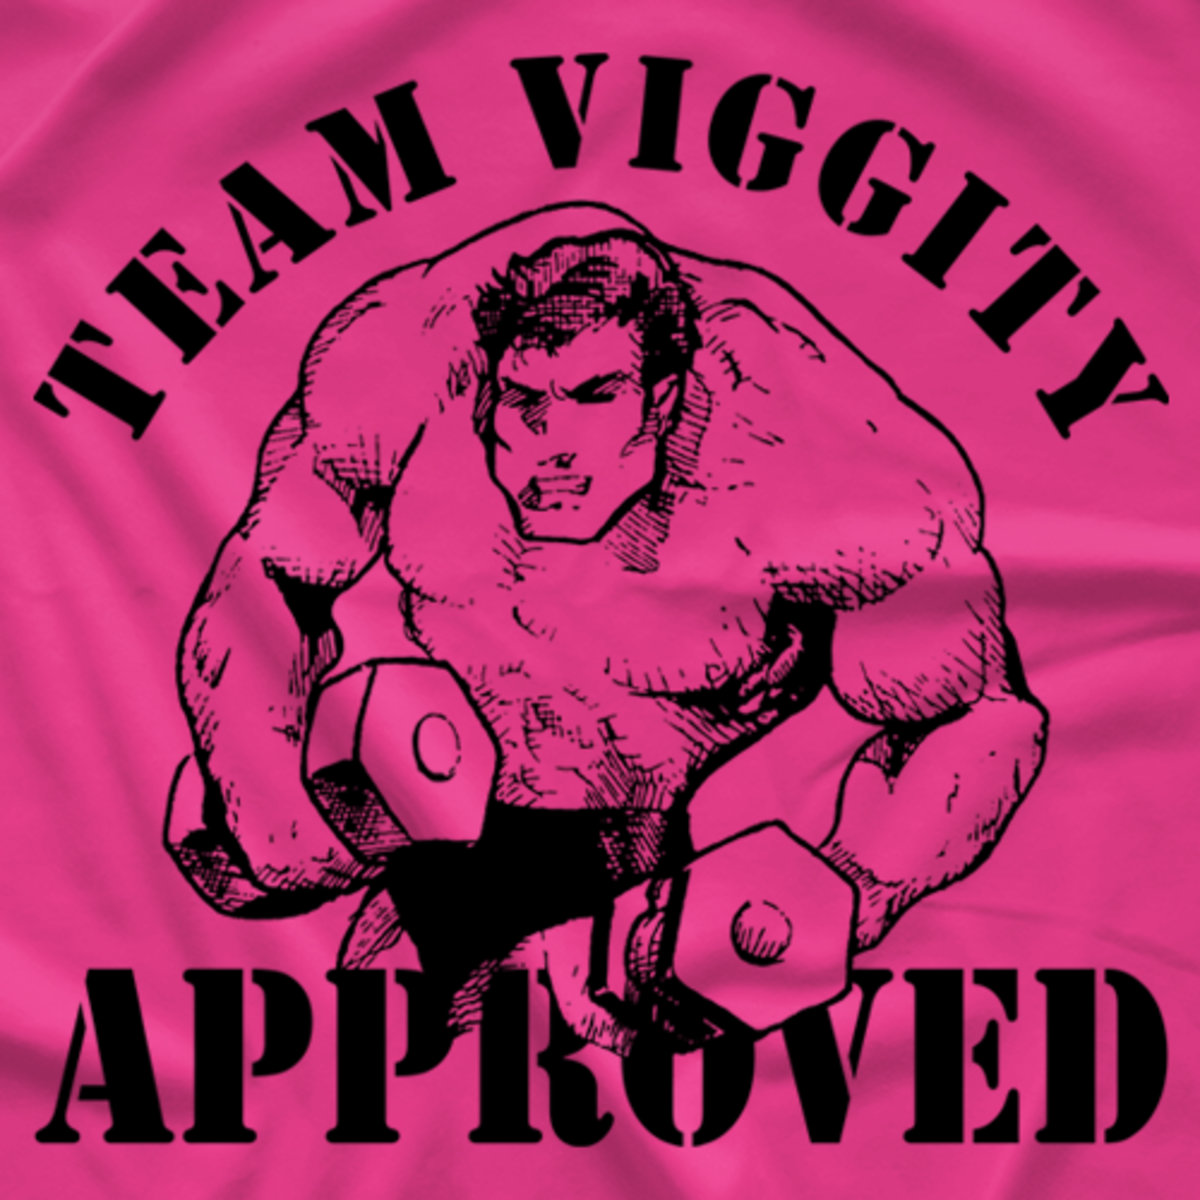 Original Team Viggity Approved